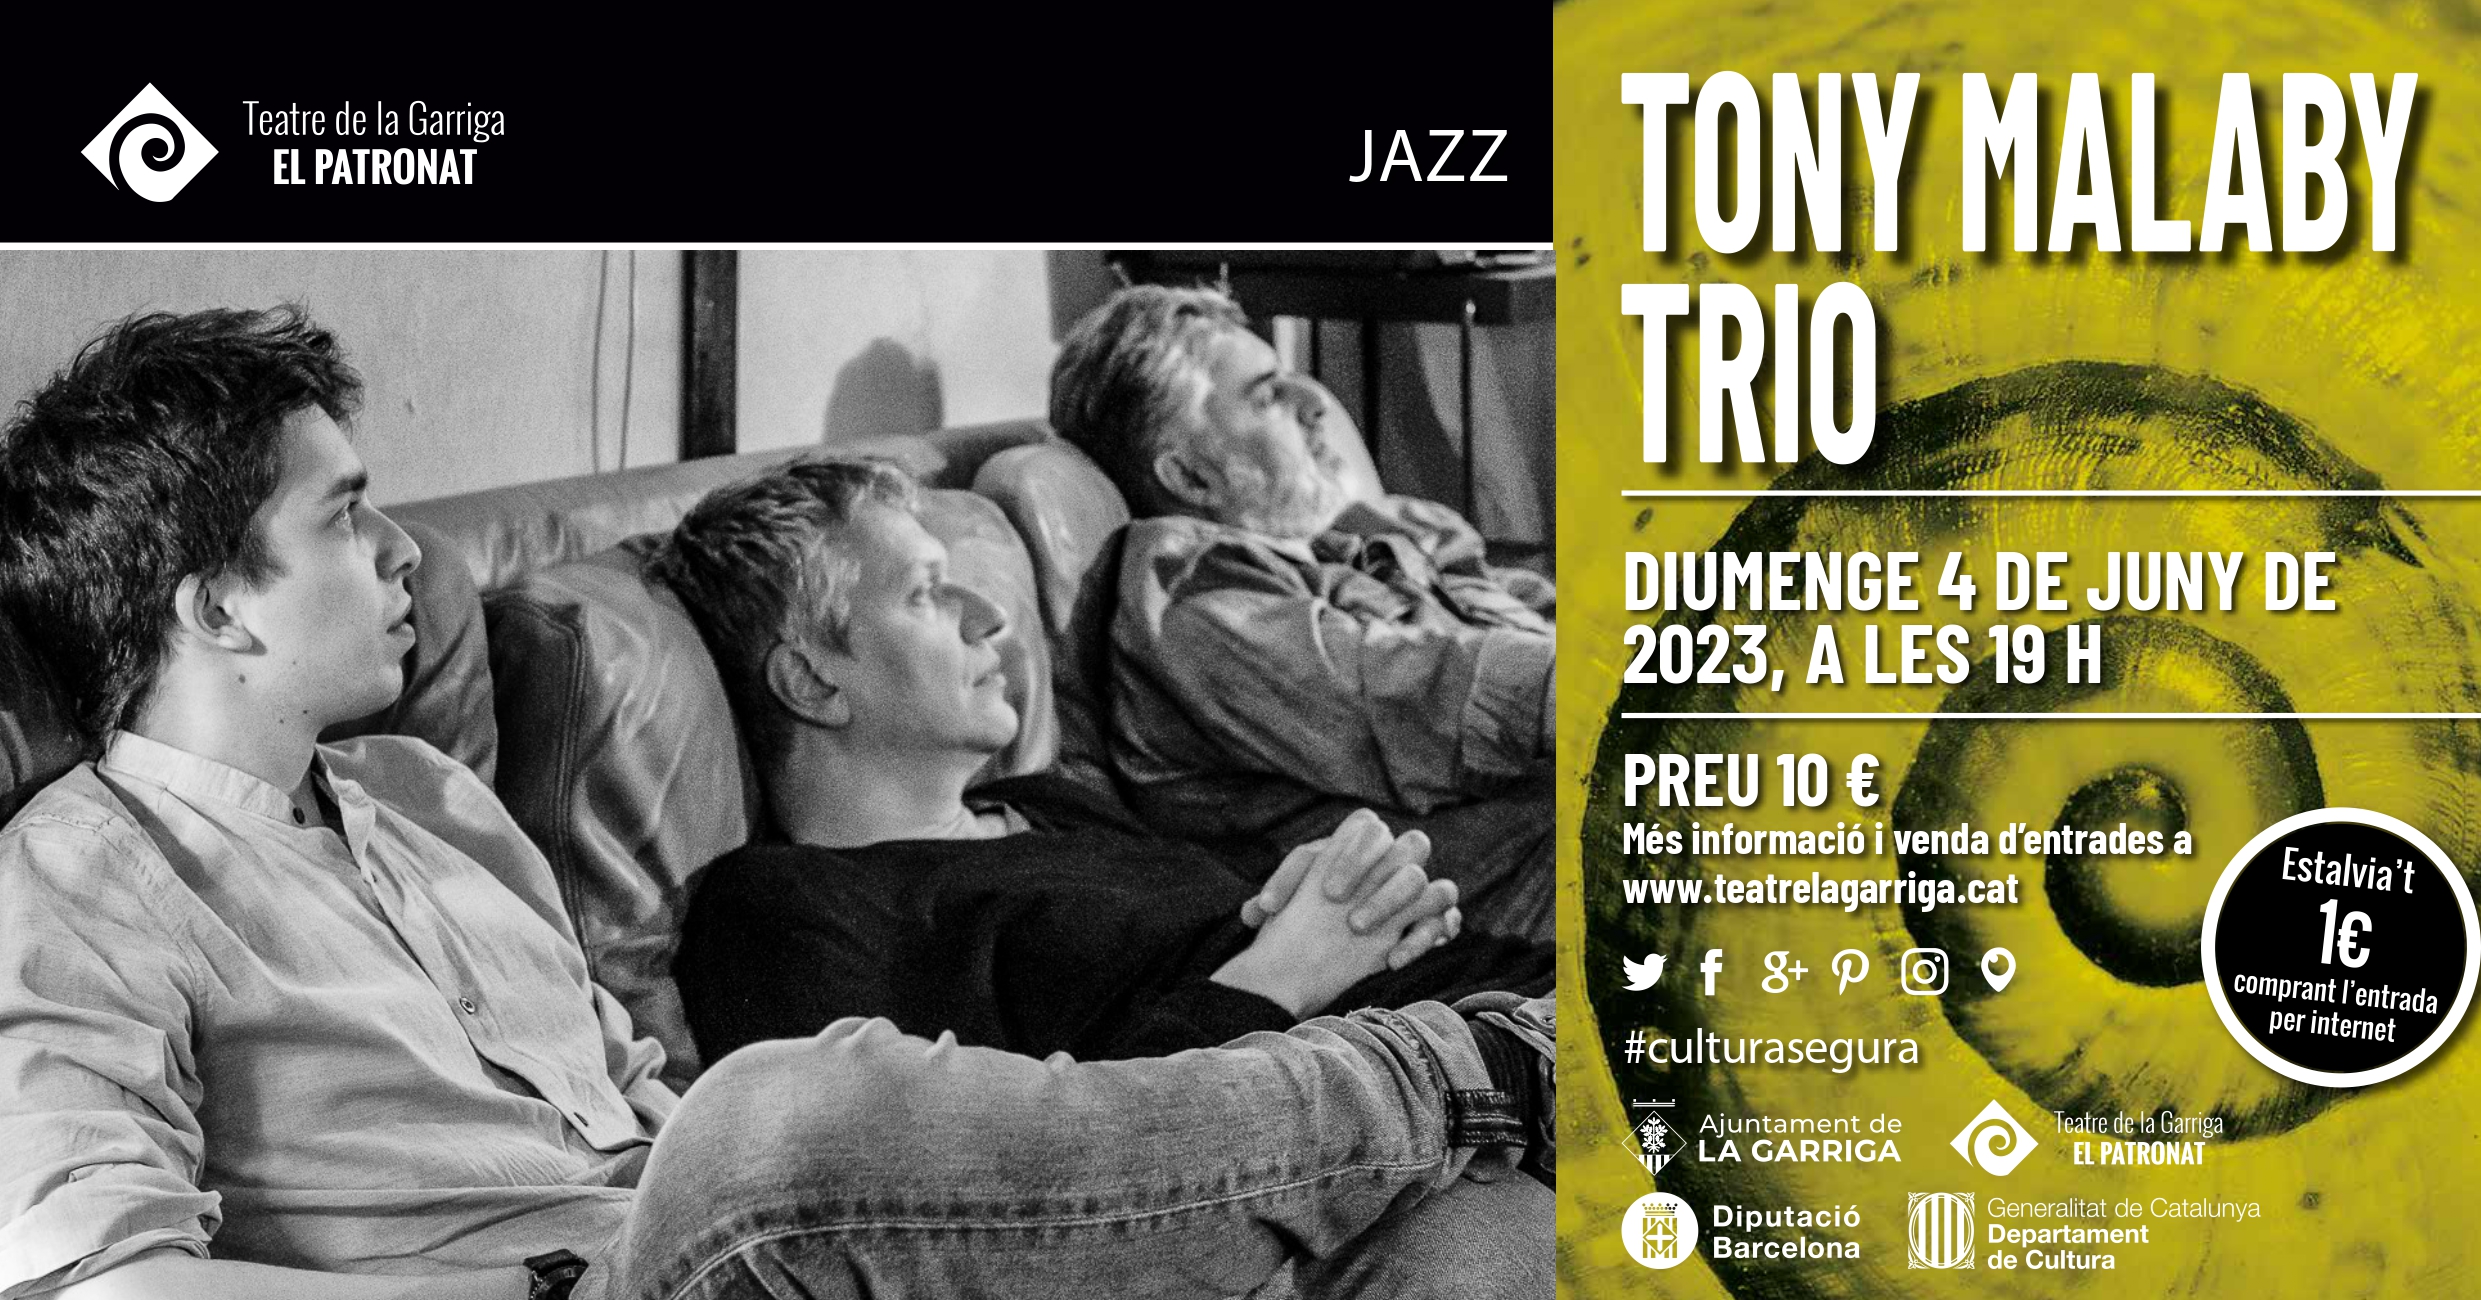 Tony Malaby Trio posa el punt i final al Festival de Jazz